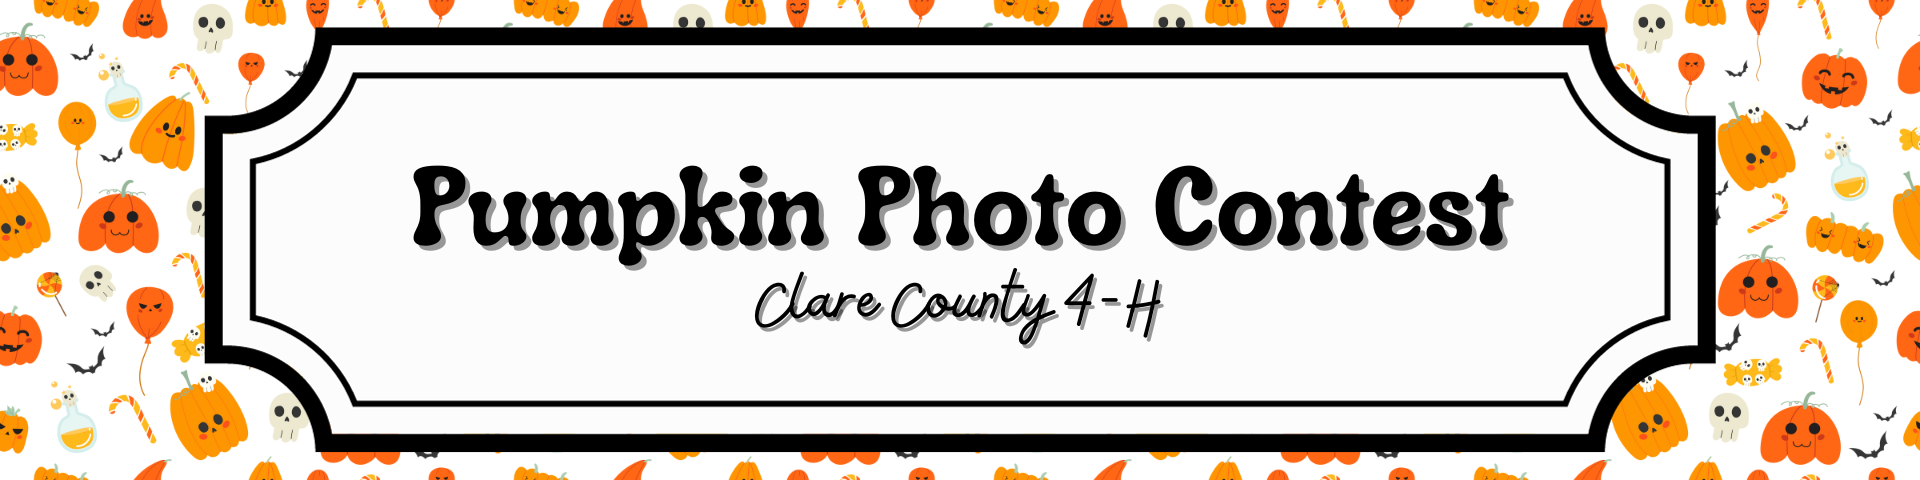 4-H Pumpkin Photo Contest.png